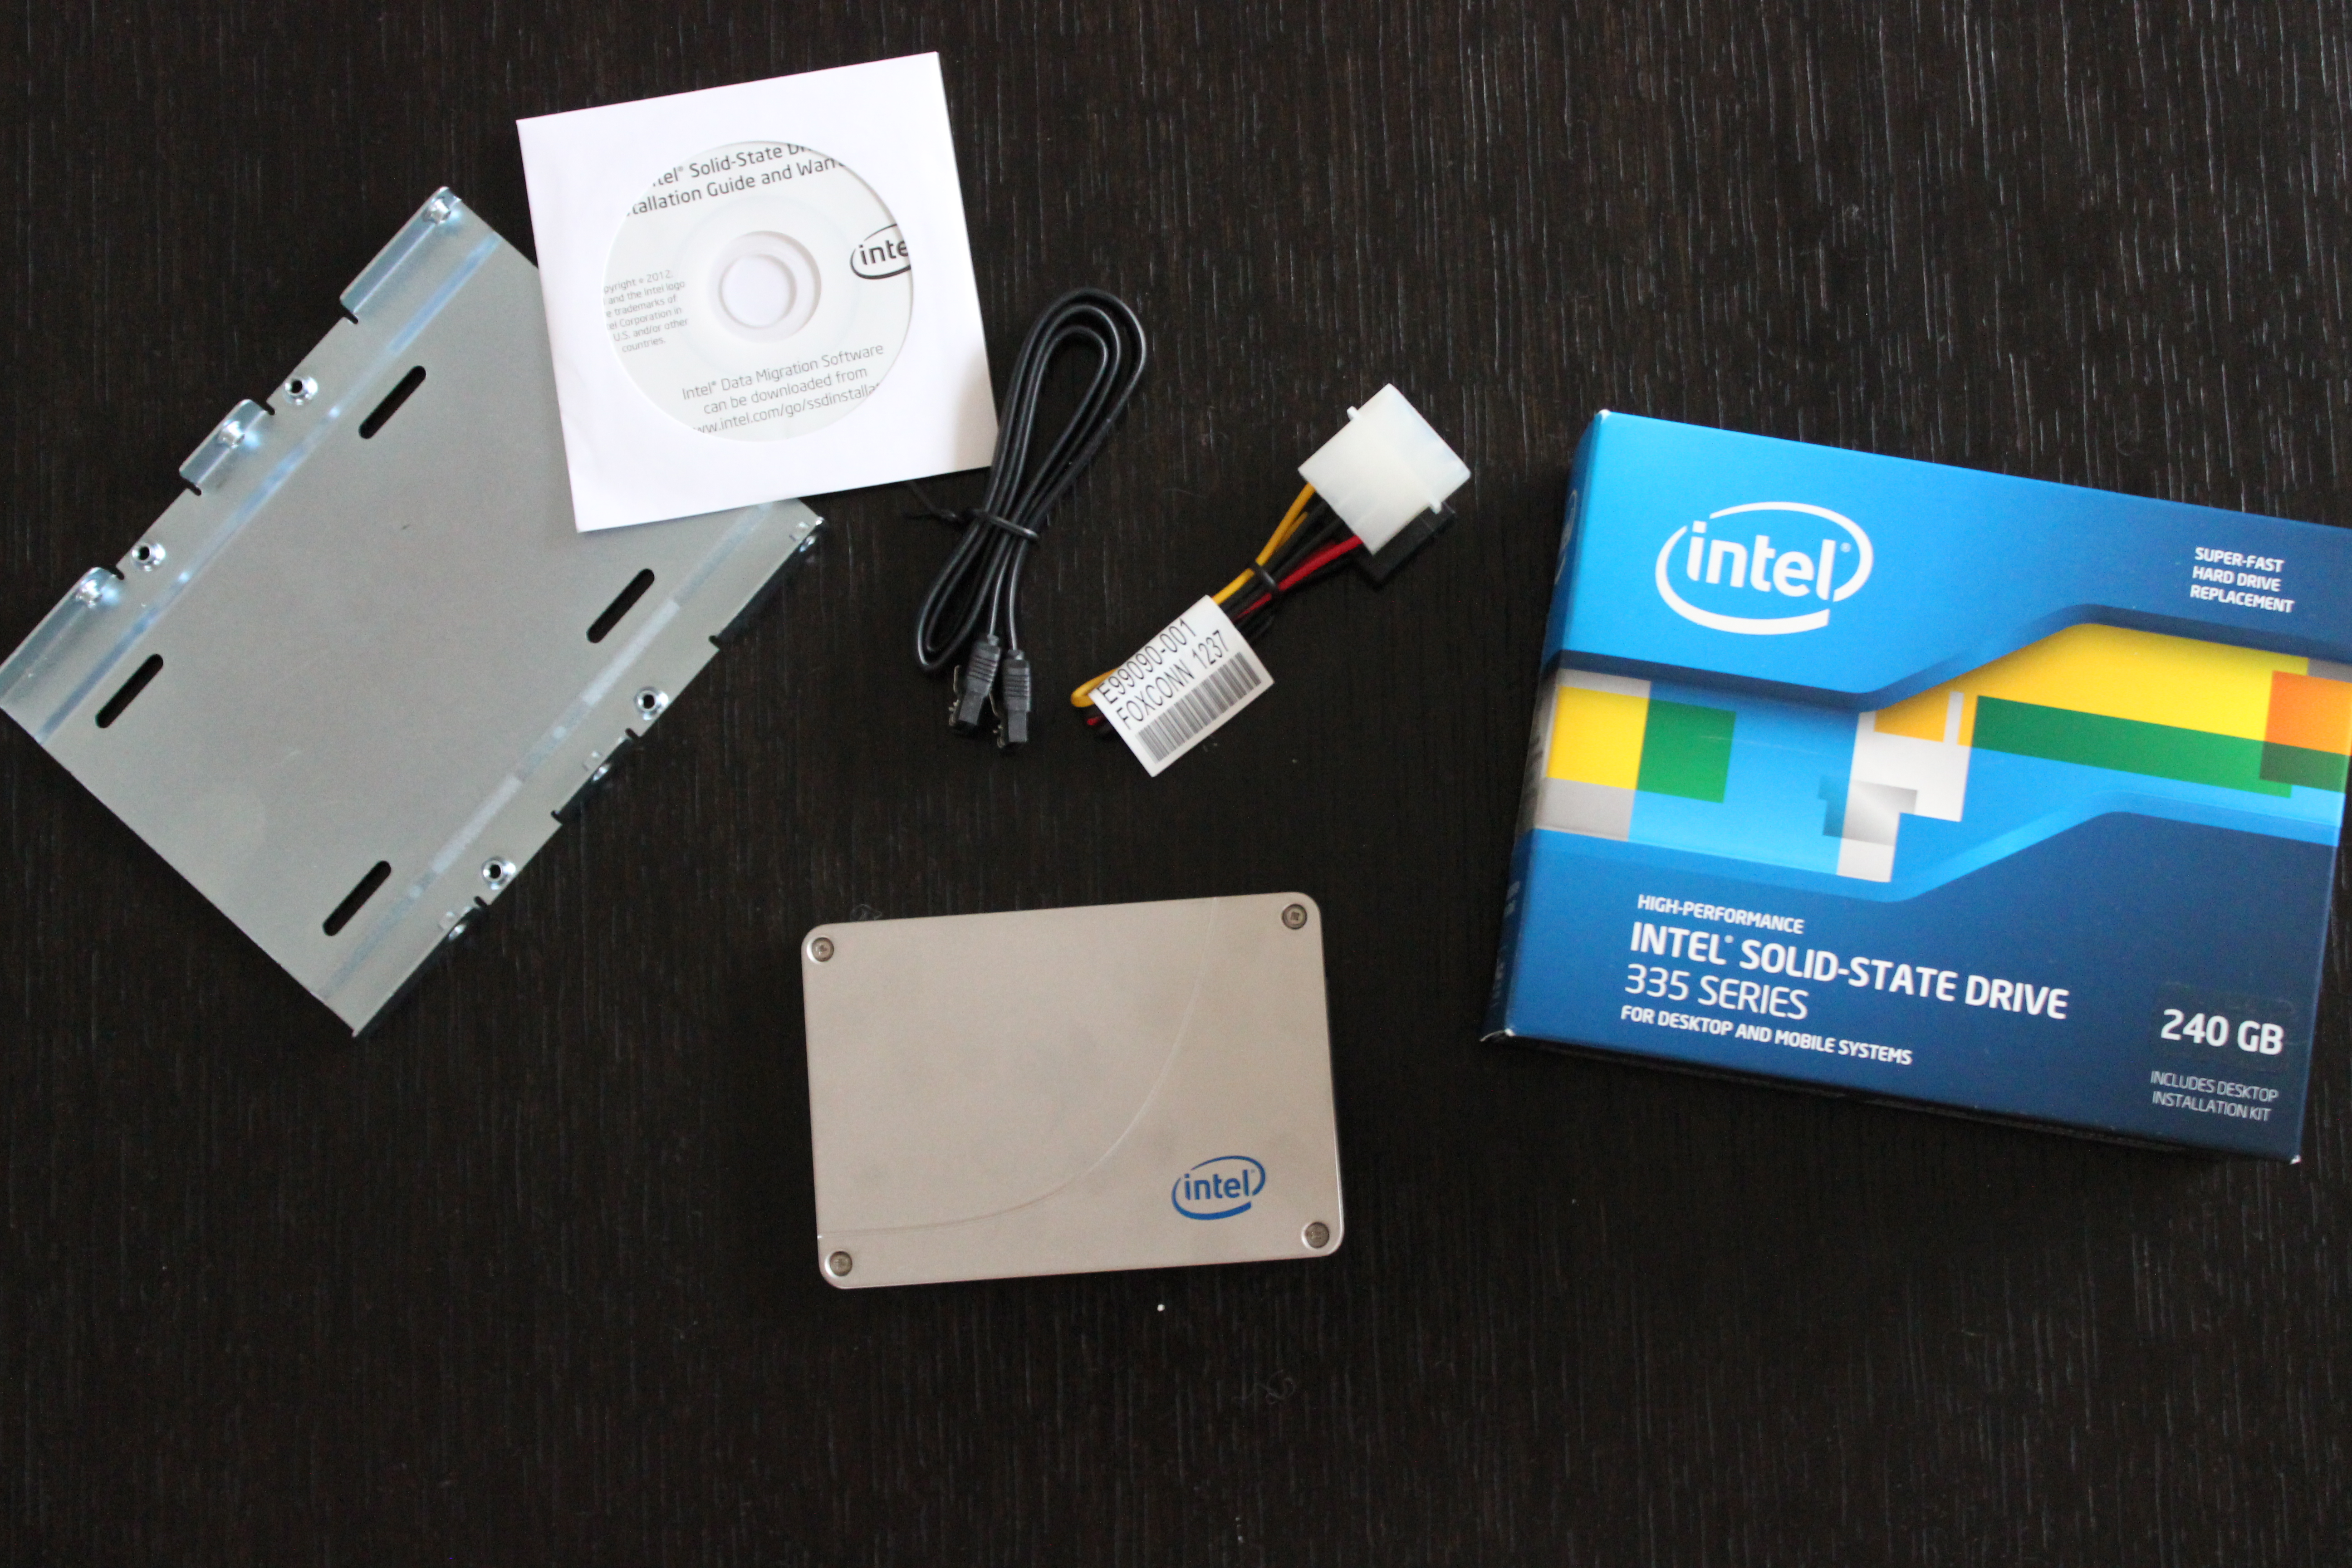 Intel SSD 335 (240GB) Review